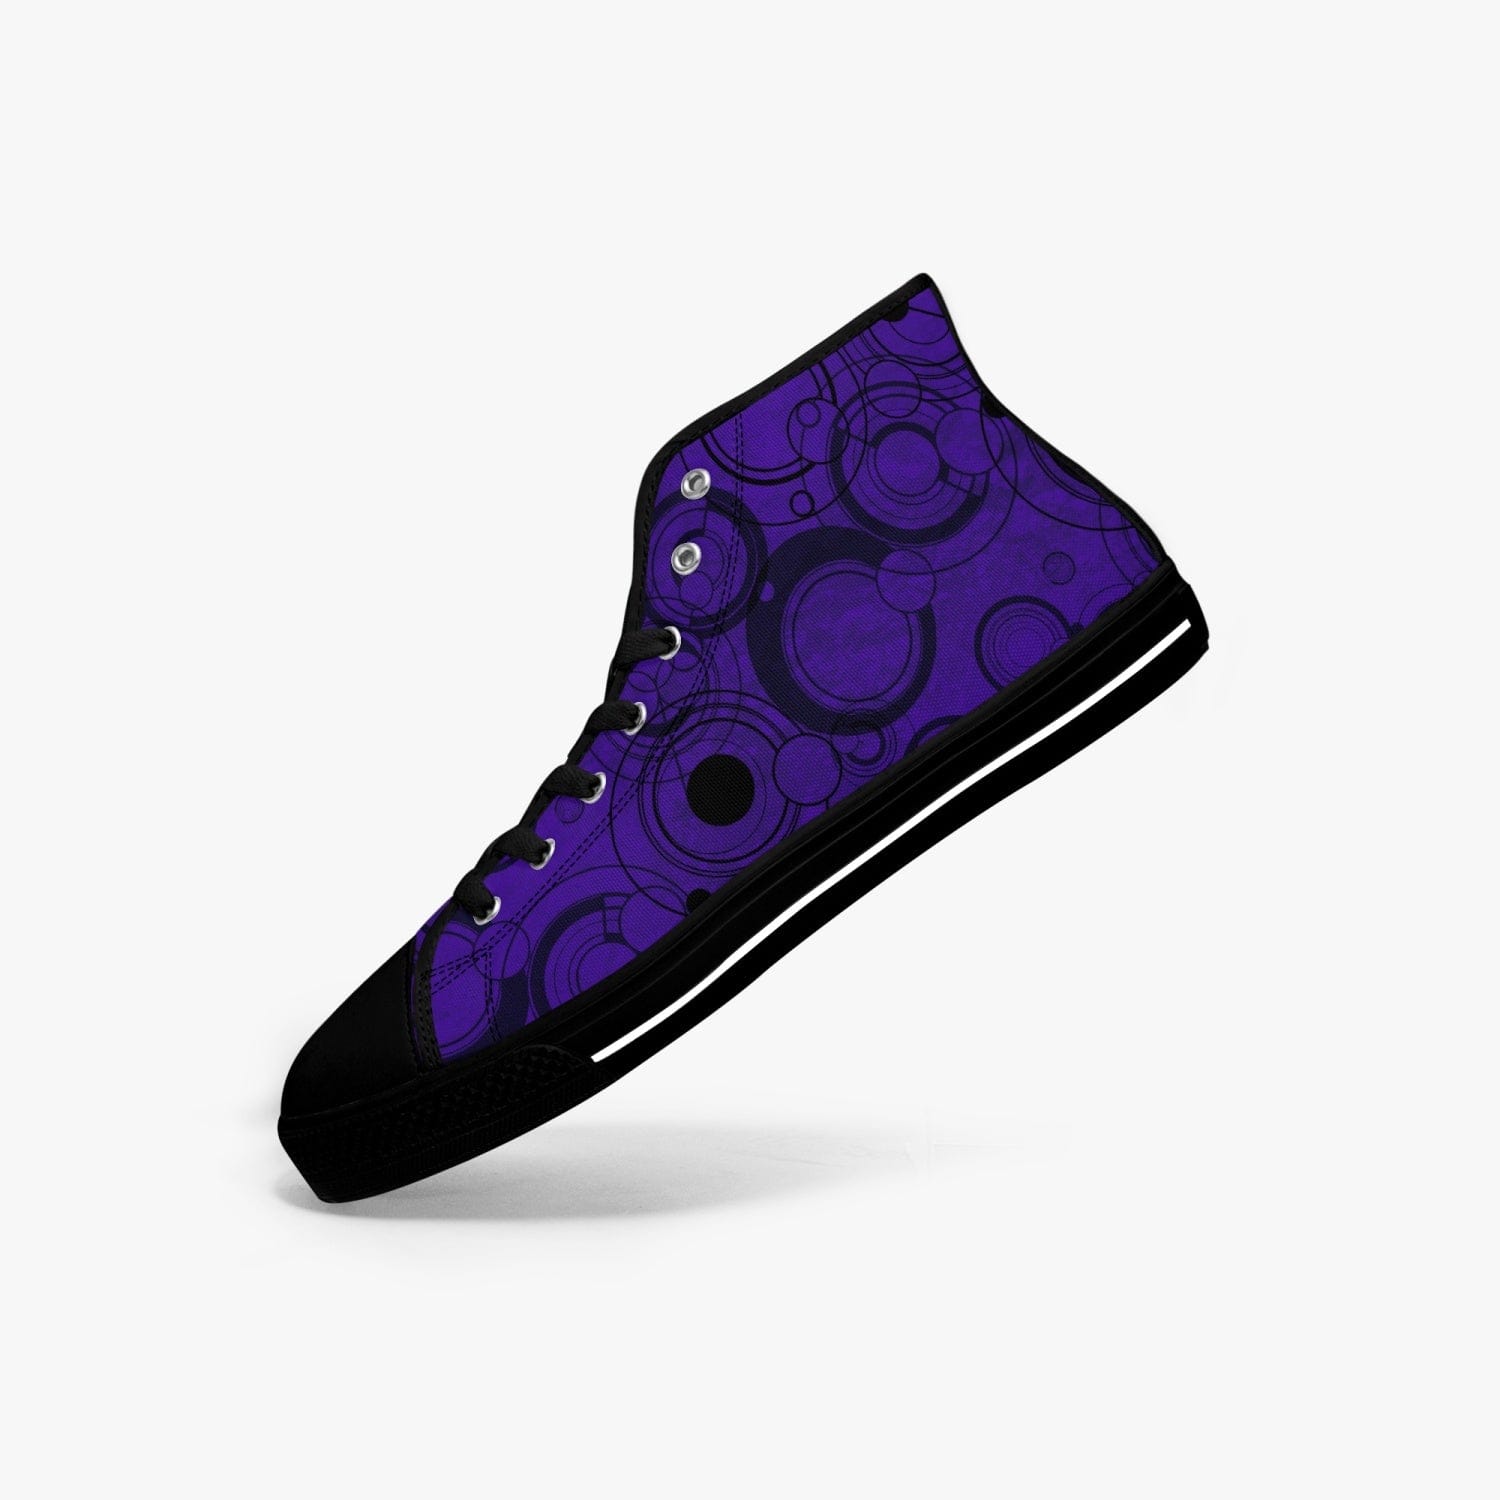 Gallifrey language high top men's sneakers in purple and black at Gallery Serpentine 1